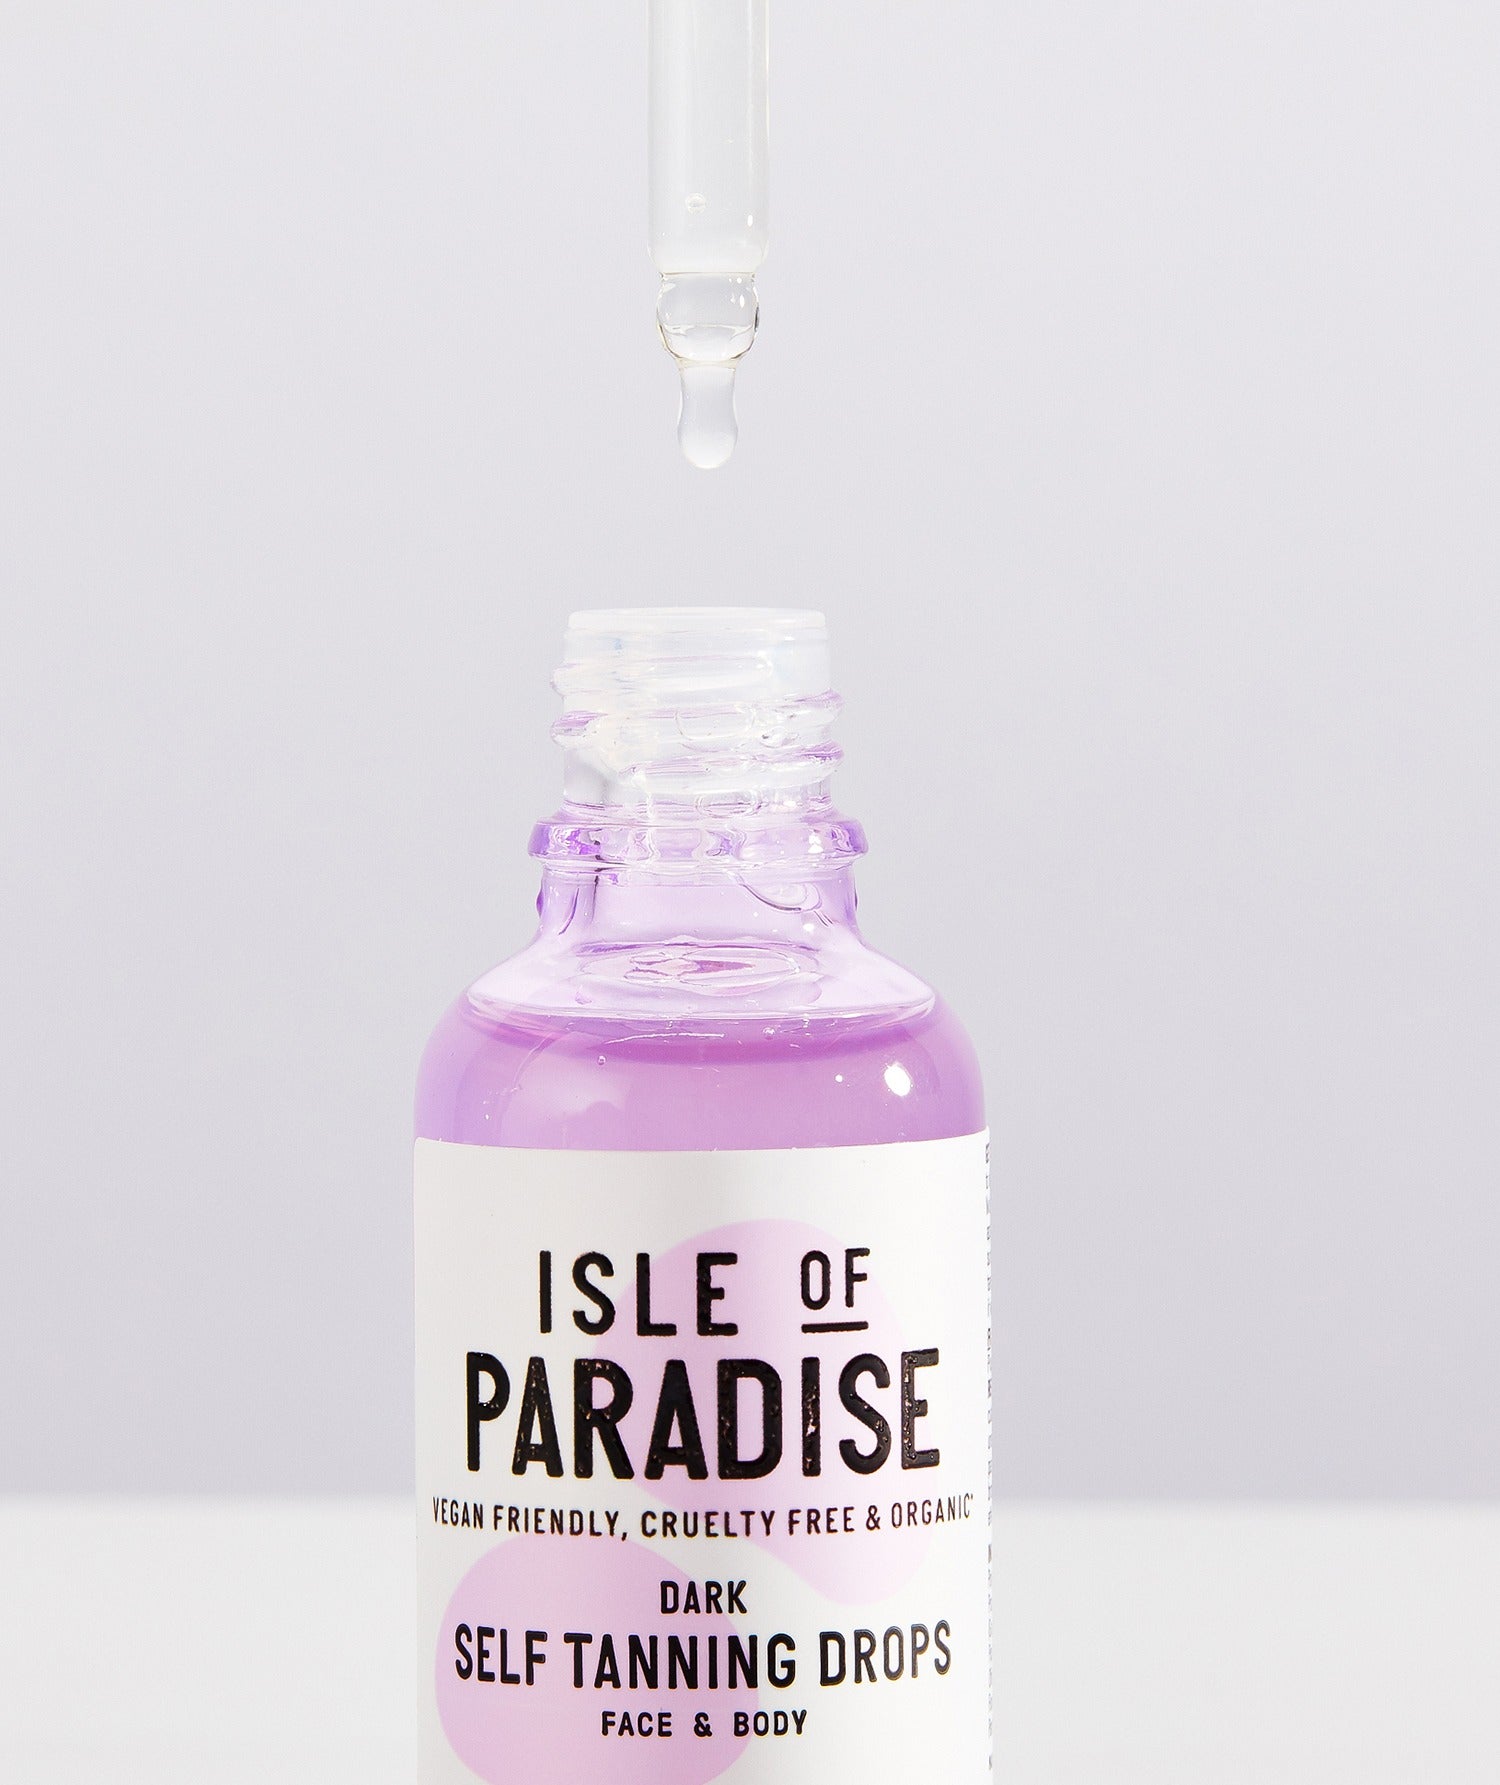 ISLE DE PARADIS - Self-tanning Drops